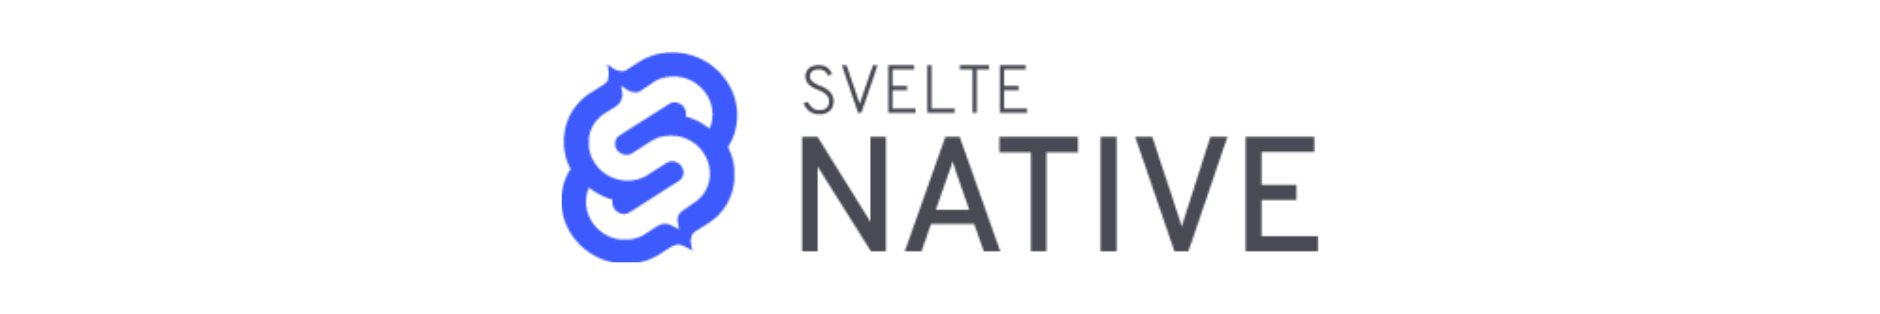 svelte-native-framework-logo